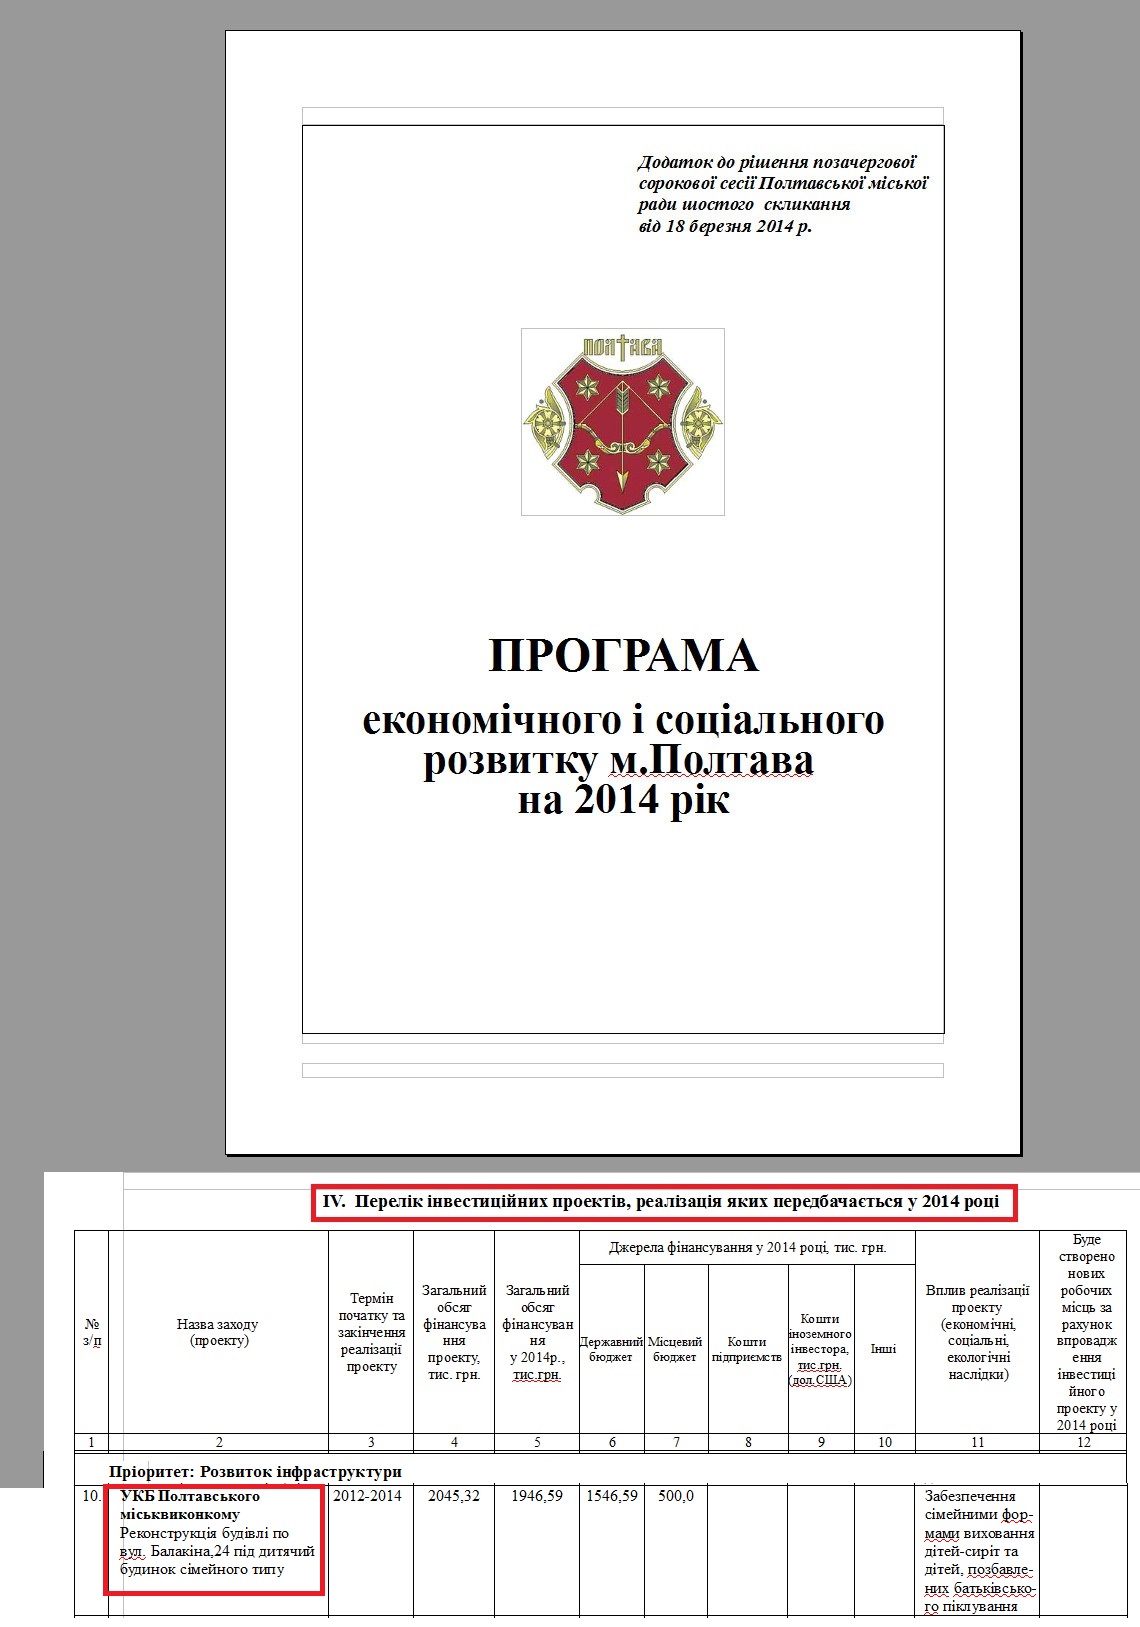 http://rada-poltava.gov.ua/documents/diyuchi_programi_miskoi_radi/